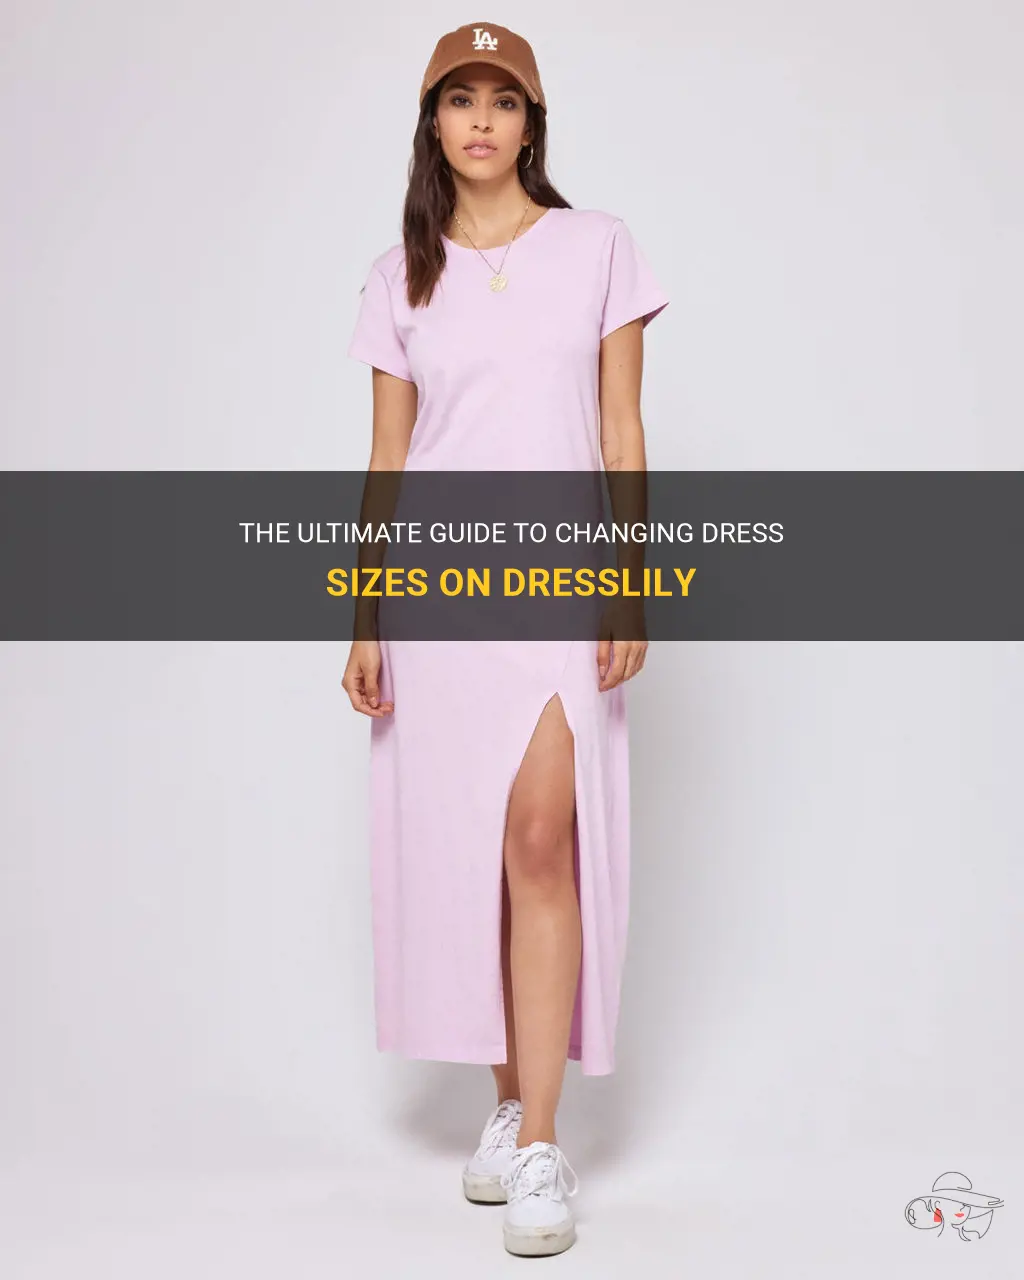 how do you change dress sizes on dresslily